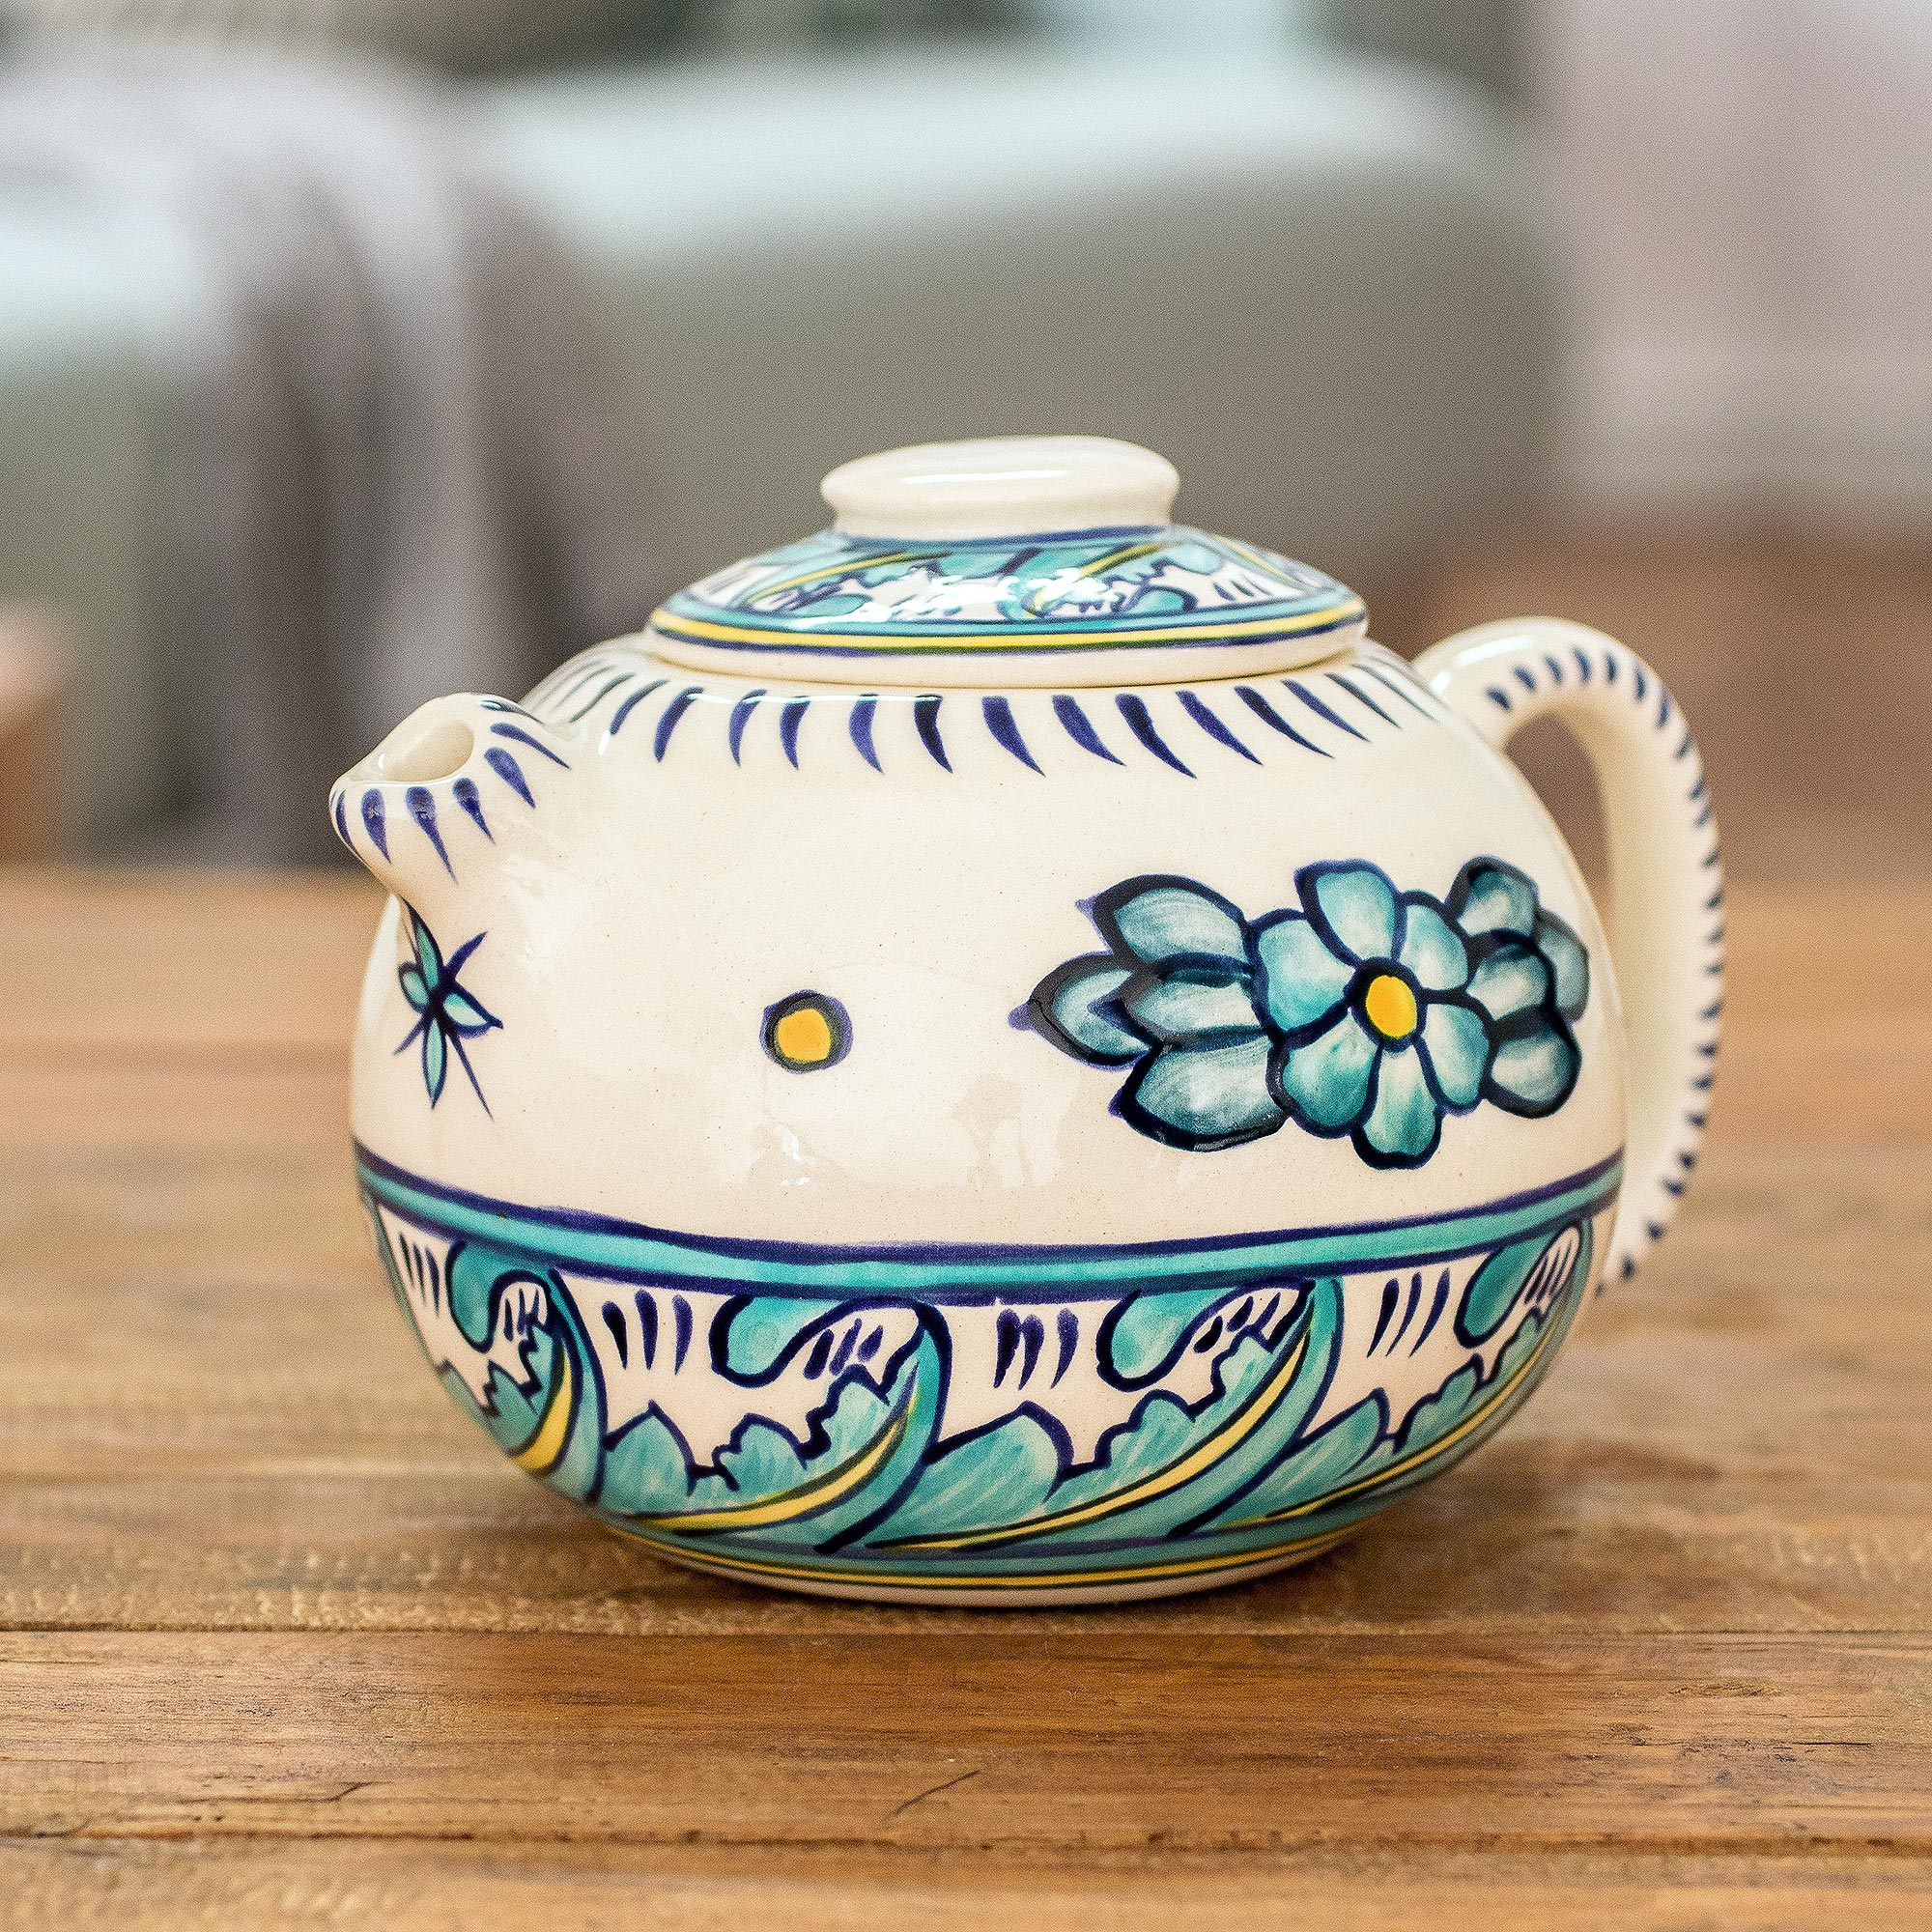 Porcelain Single Teacup And Saucer Set With Teapot With Christmas Theme  Design